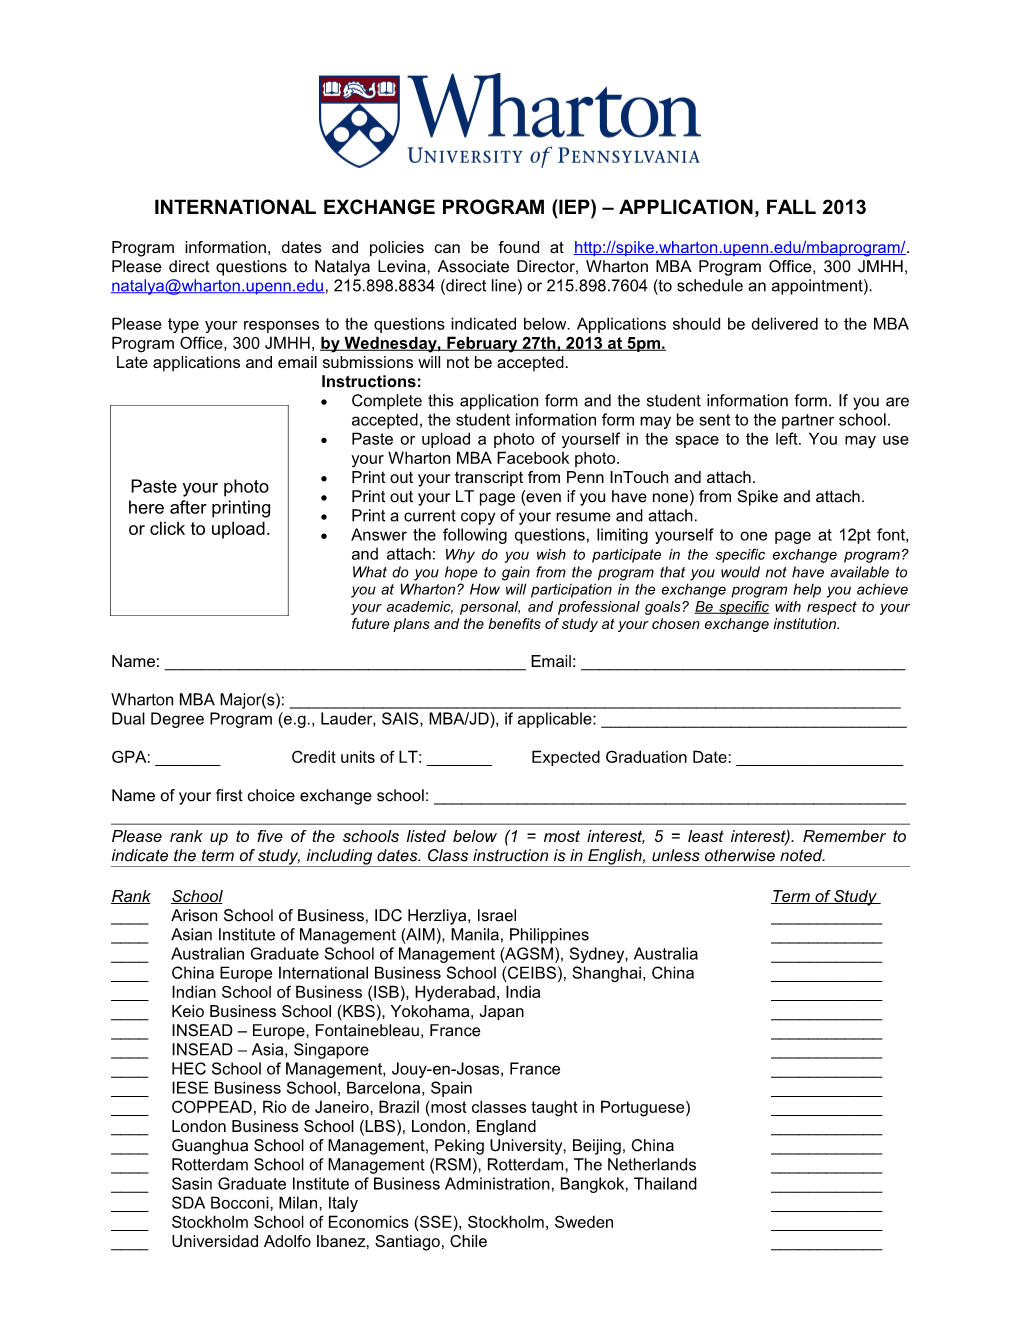 International Exchange Program (Iep) Application, Fall 2013